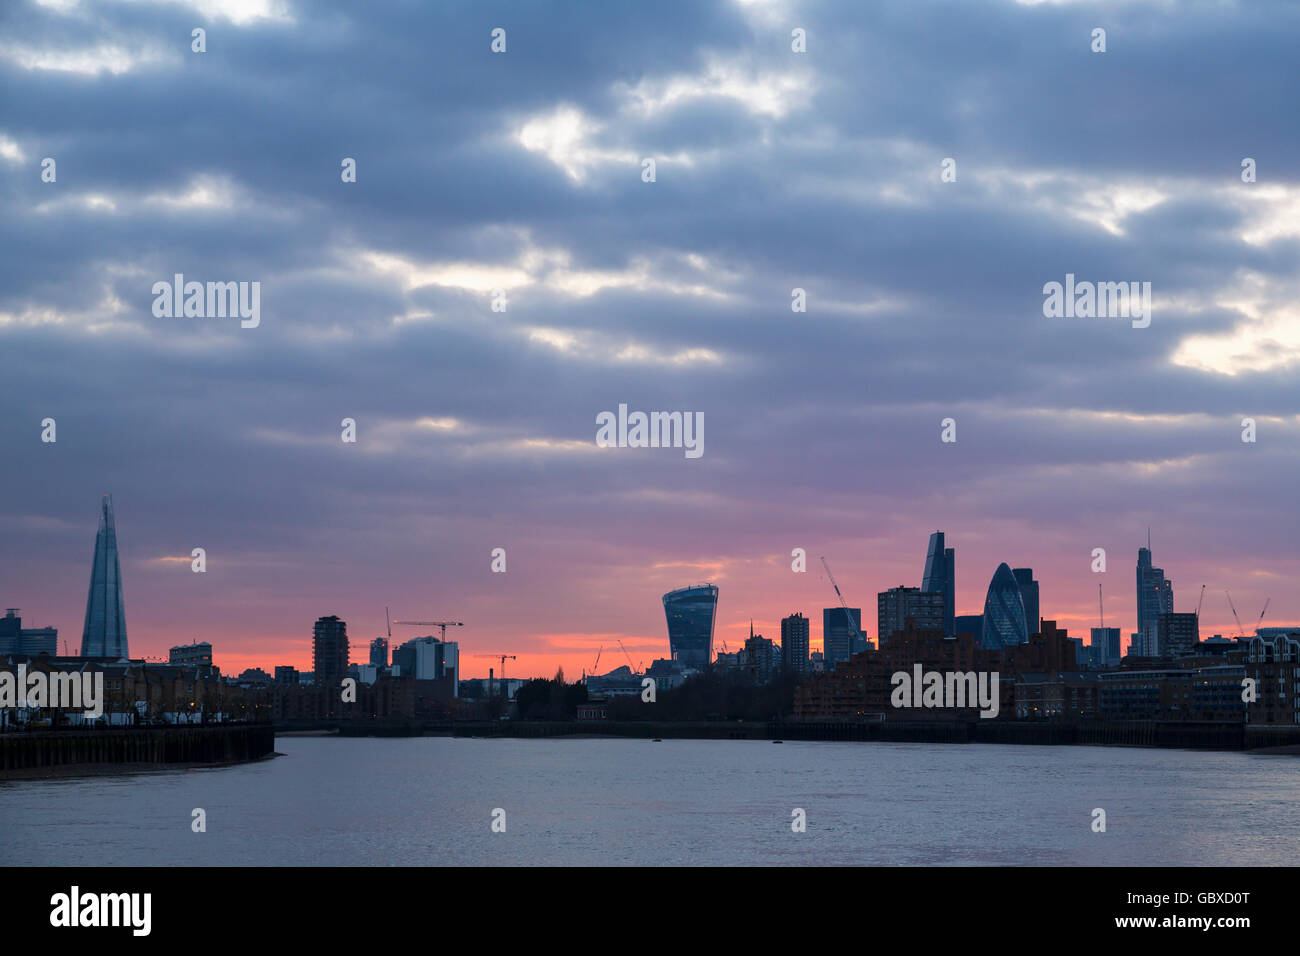 London skyline at sunset with apartment blocks Stock Photo